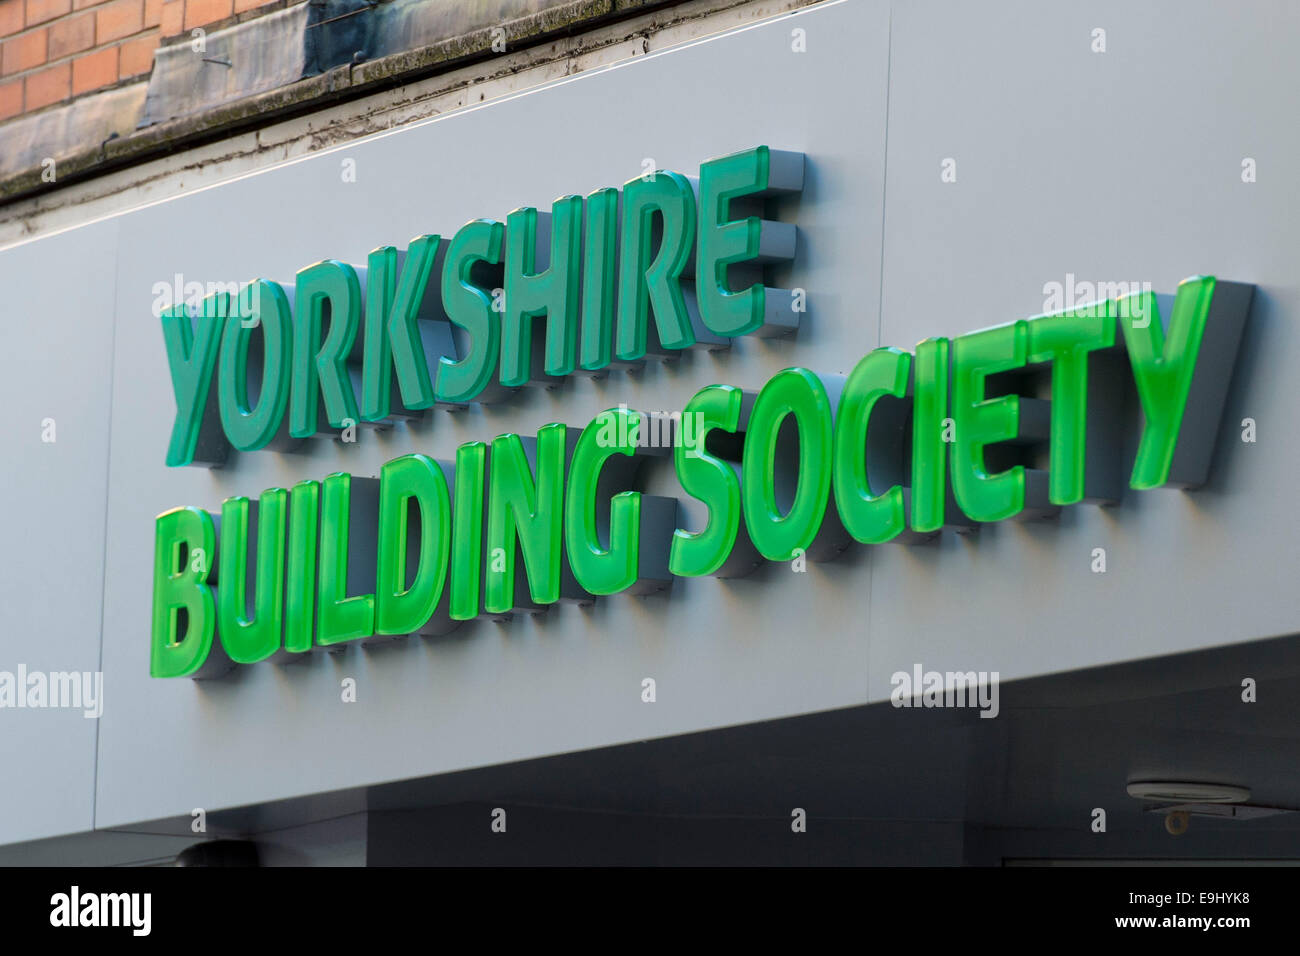 Yorkshire Building Society Bank Sign. Stockfoto